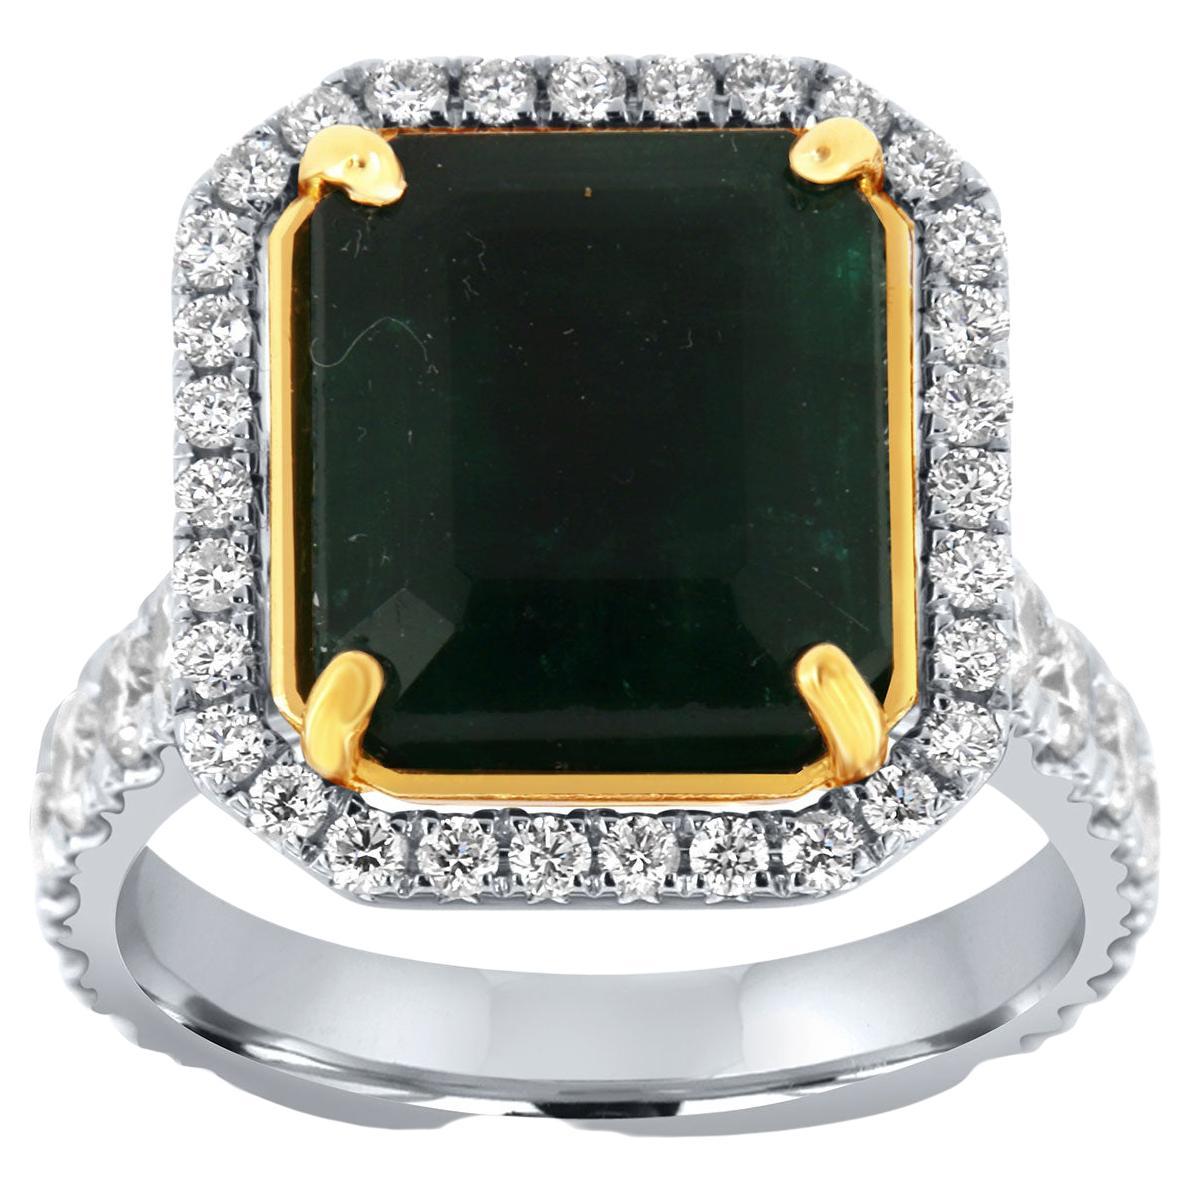 14K White & Yellow Gold GIA Certified 7.51 Carat Green Emerald Halo Diamond Ring